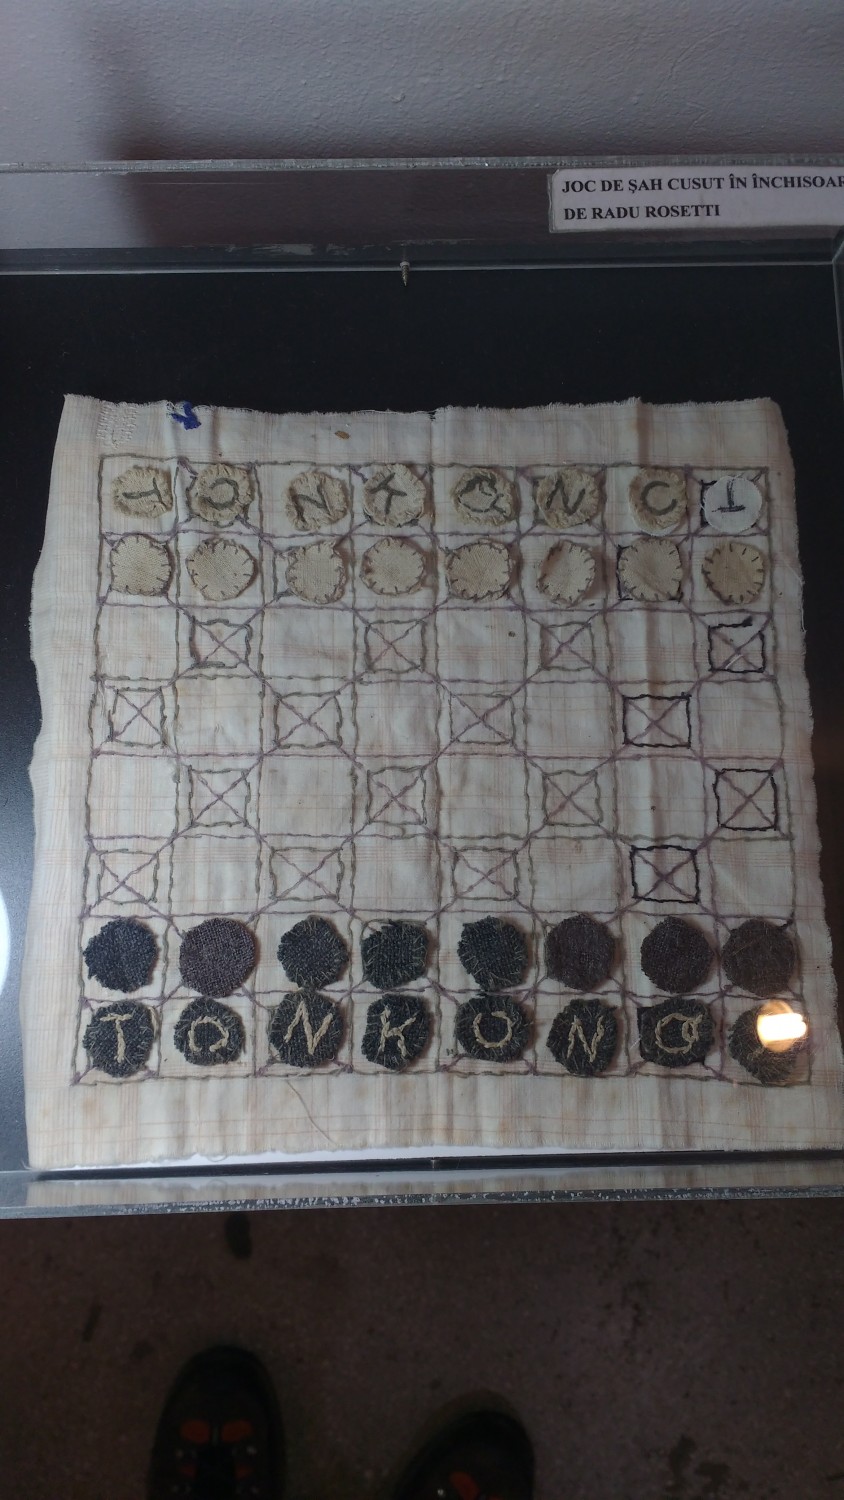 A chess set made of cloth